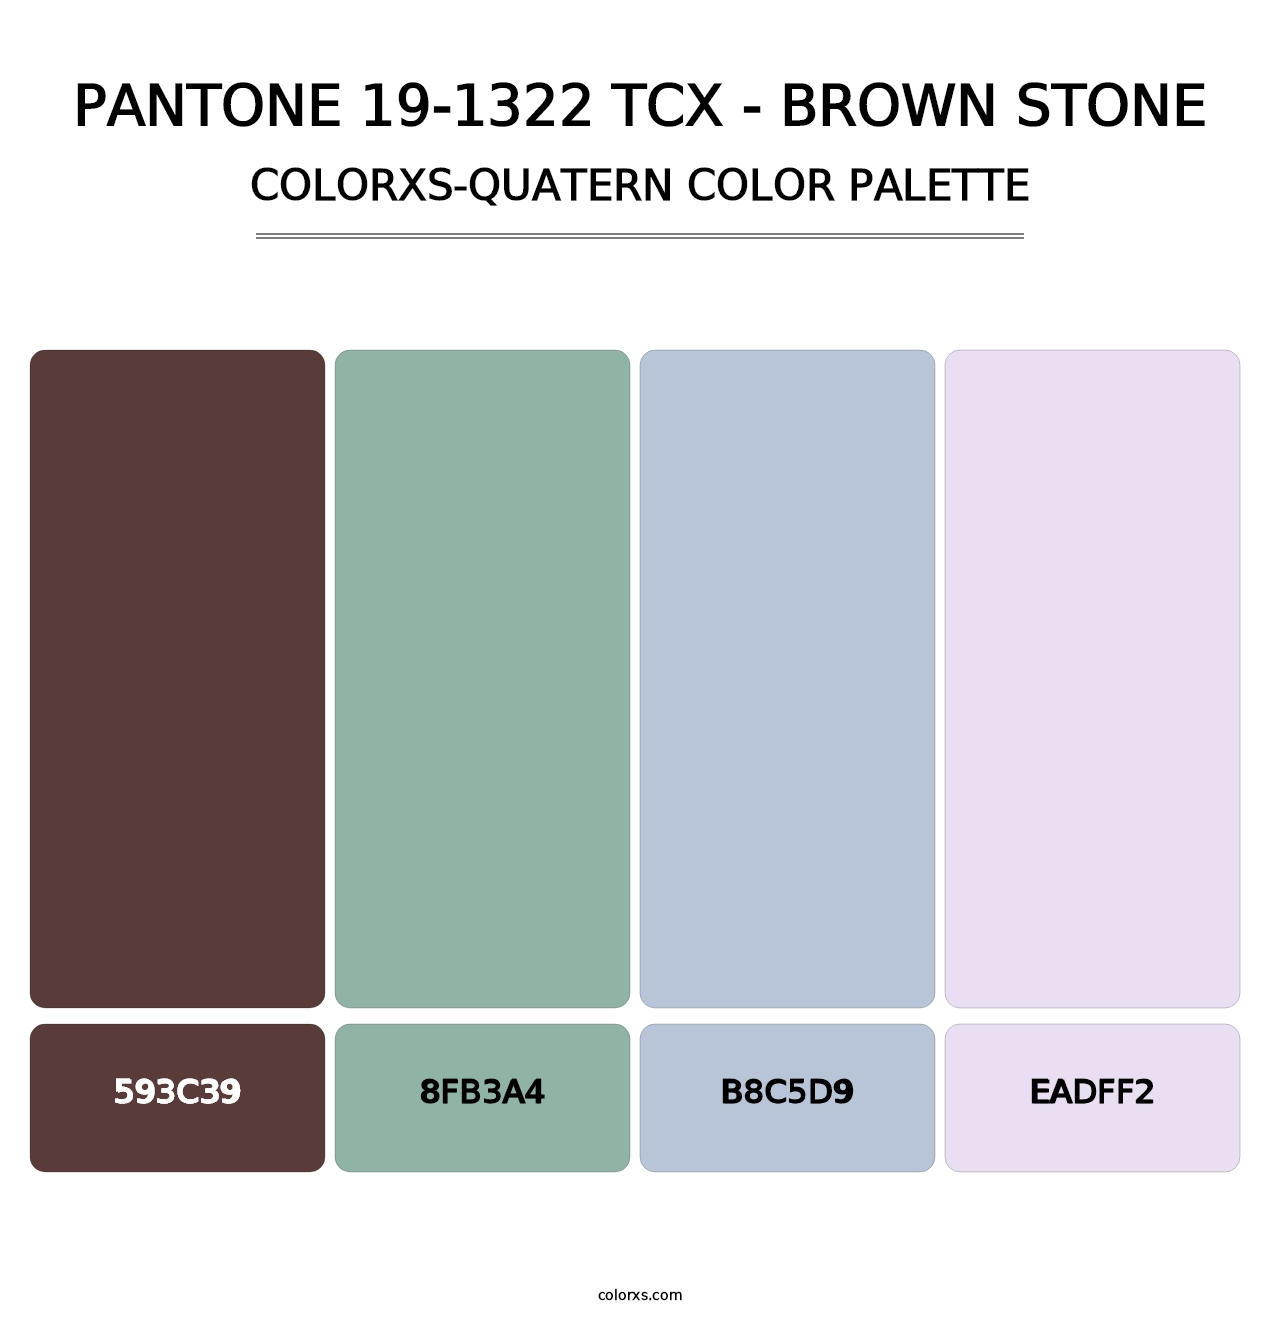 PANTONE 19-1322 TCX - Brown Stone - Colorxs Quatern Palette